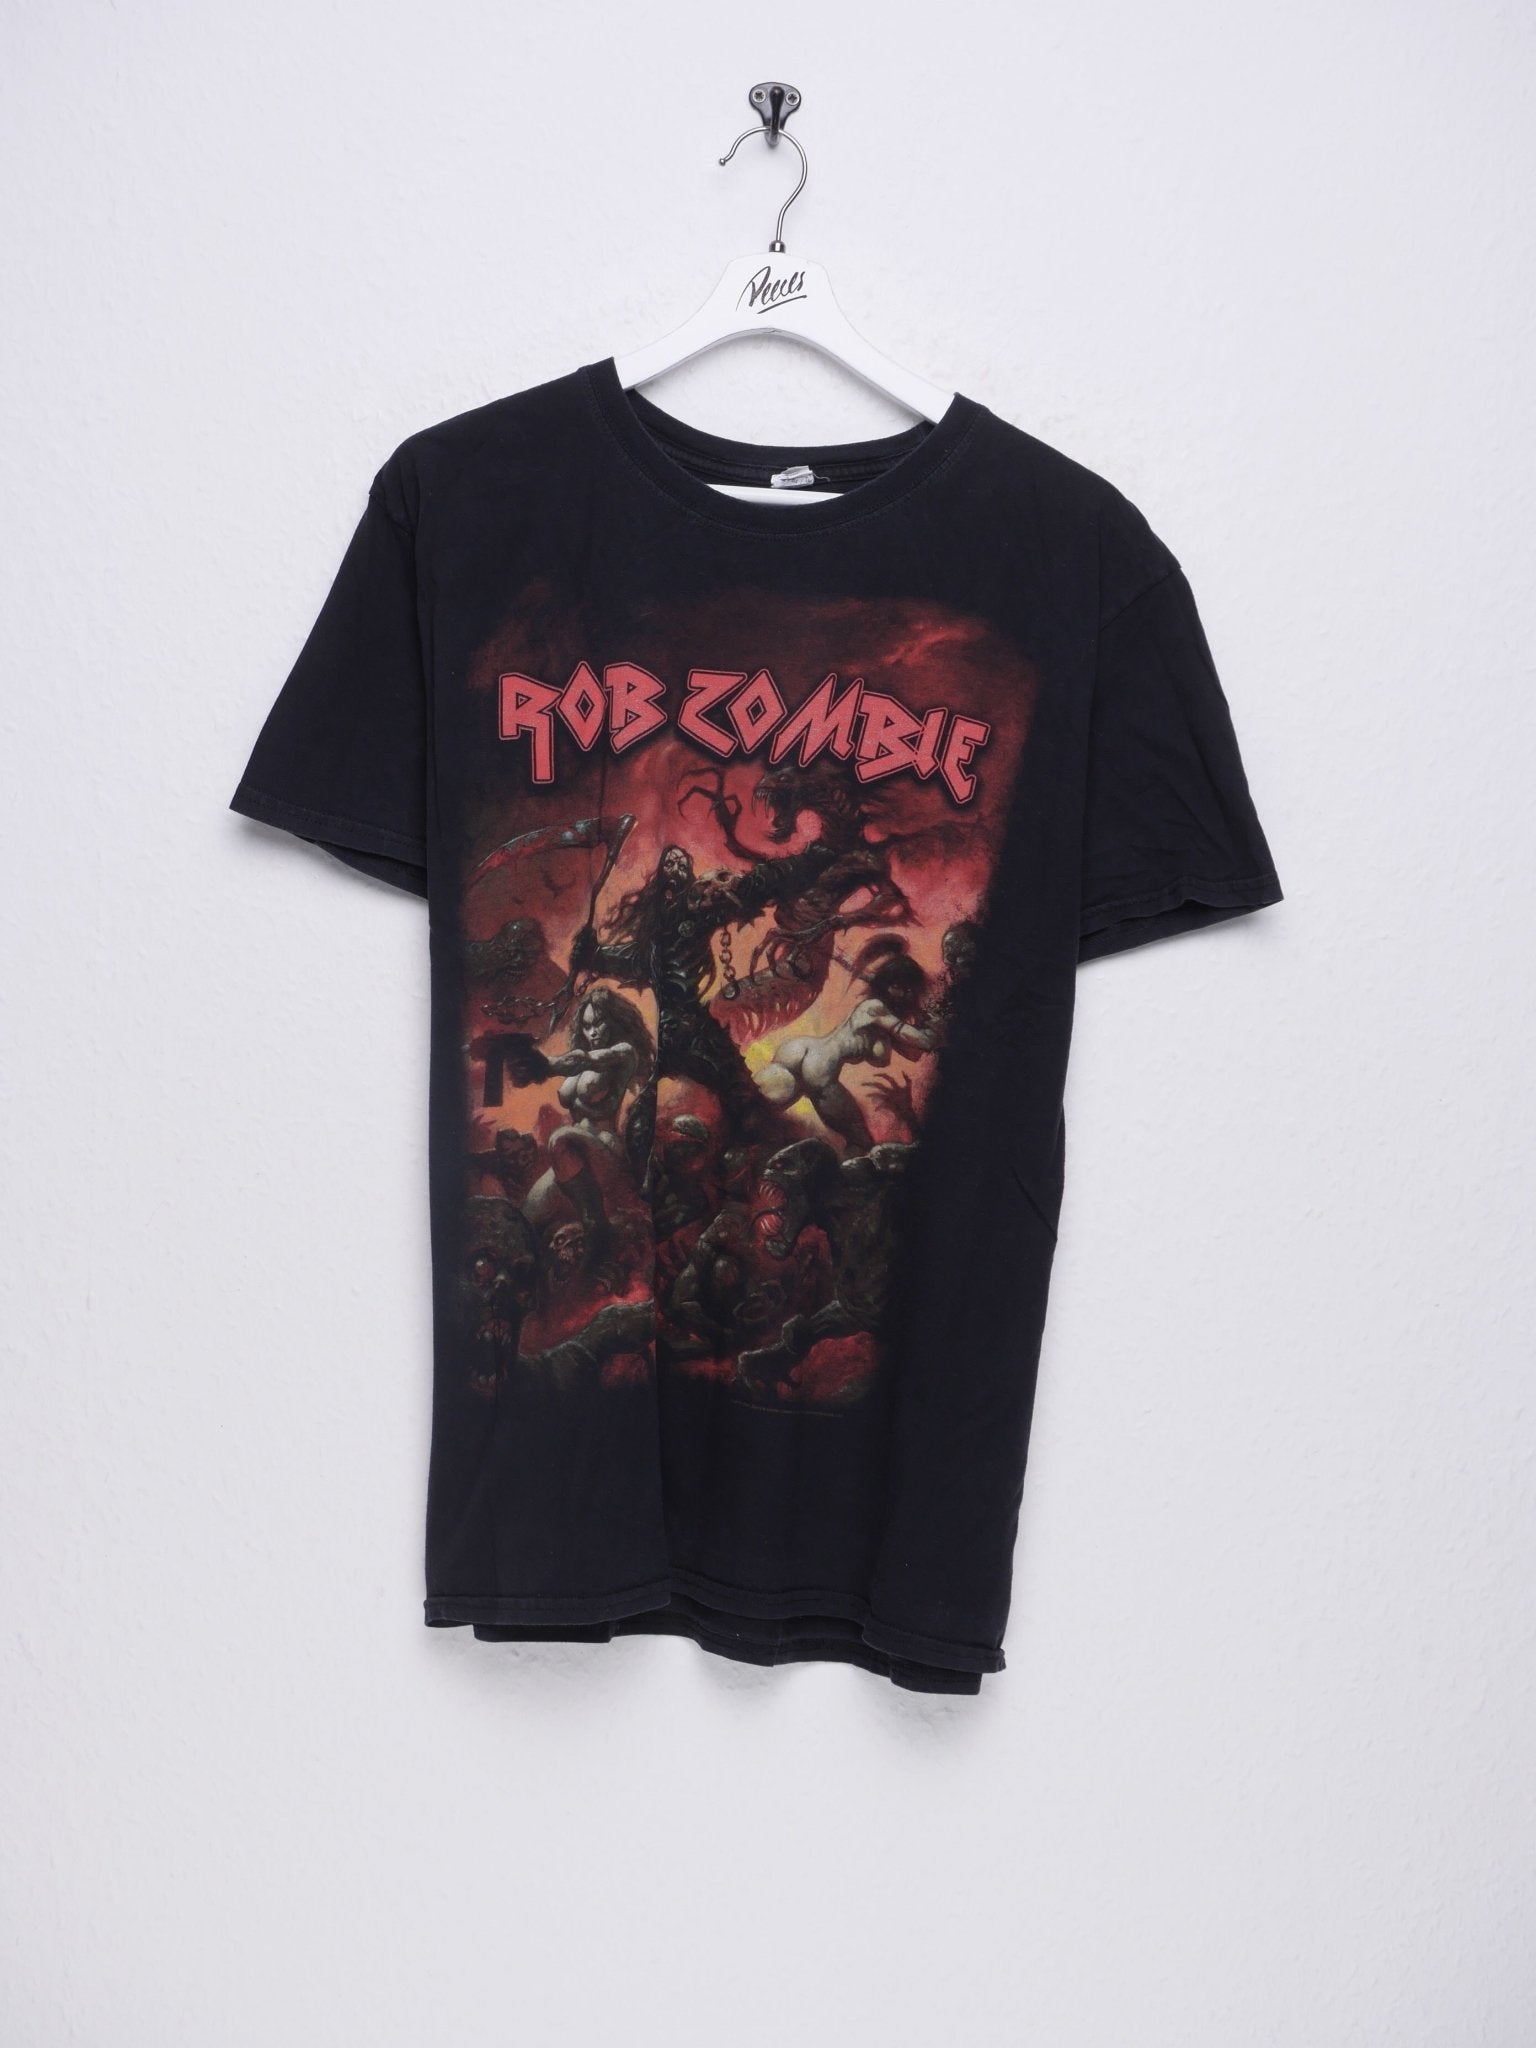 Rob Zombie printed Graphic black Shirt - Peeces